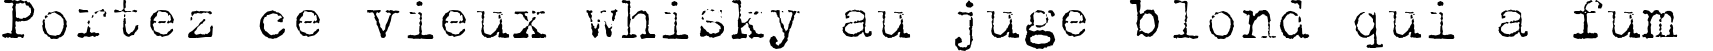 Пример написания шрифтом TrixieCyr-Light текста на французском